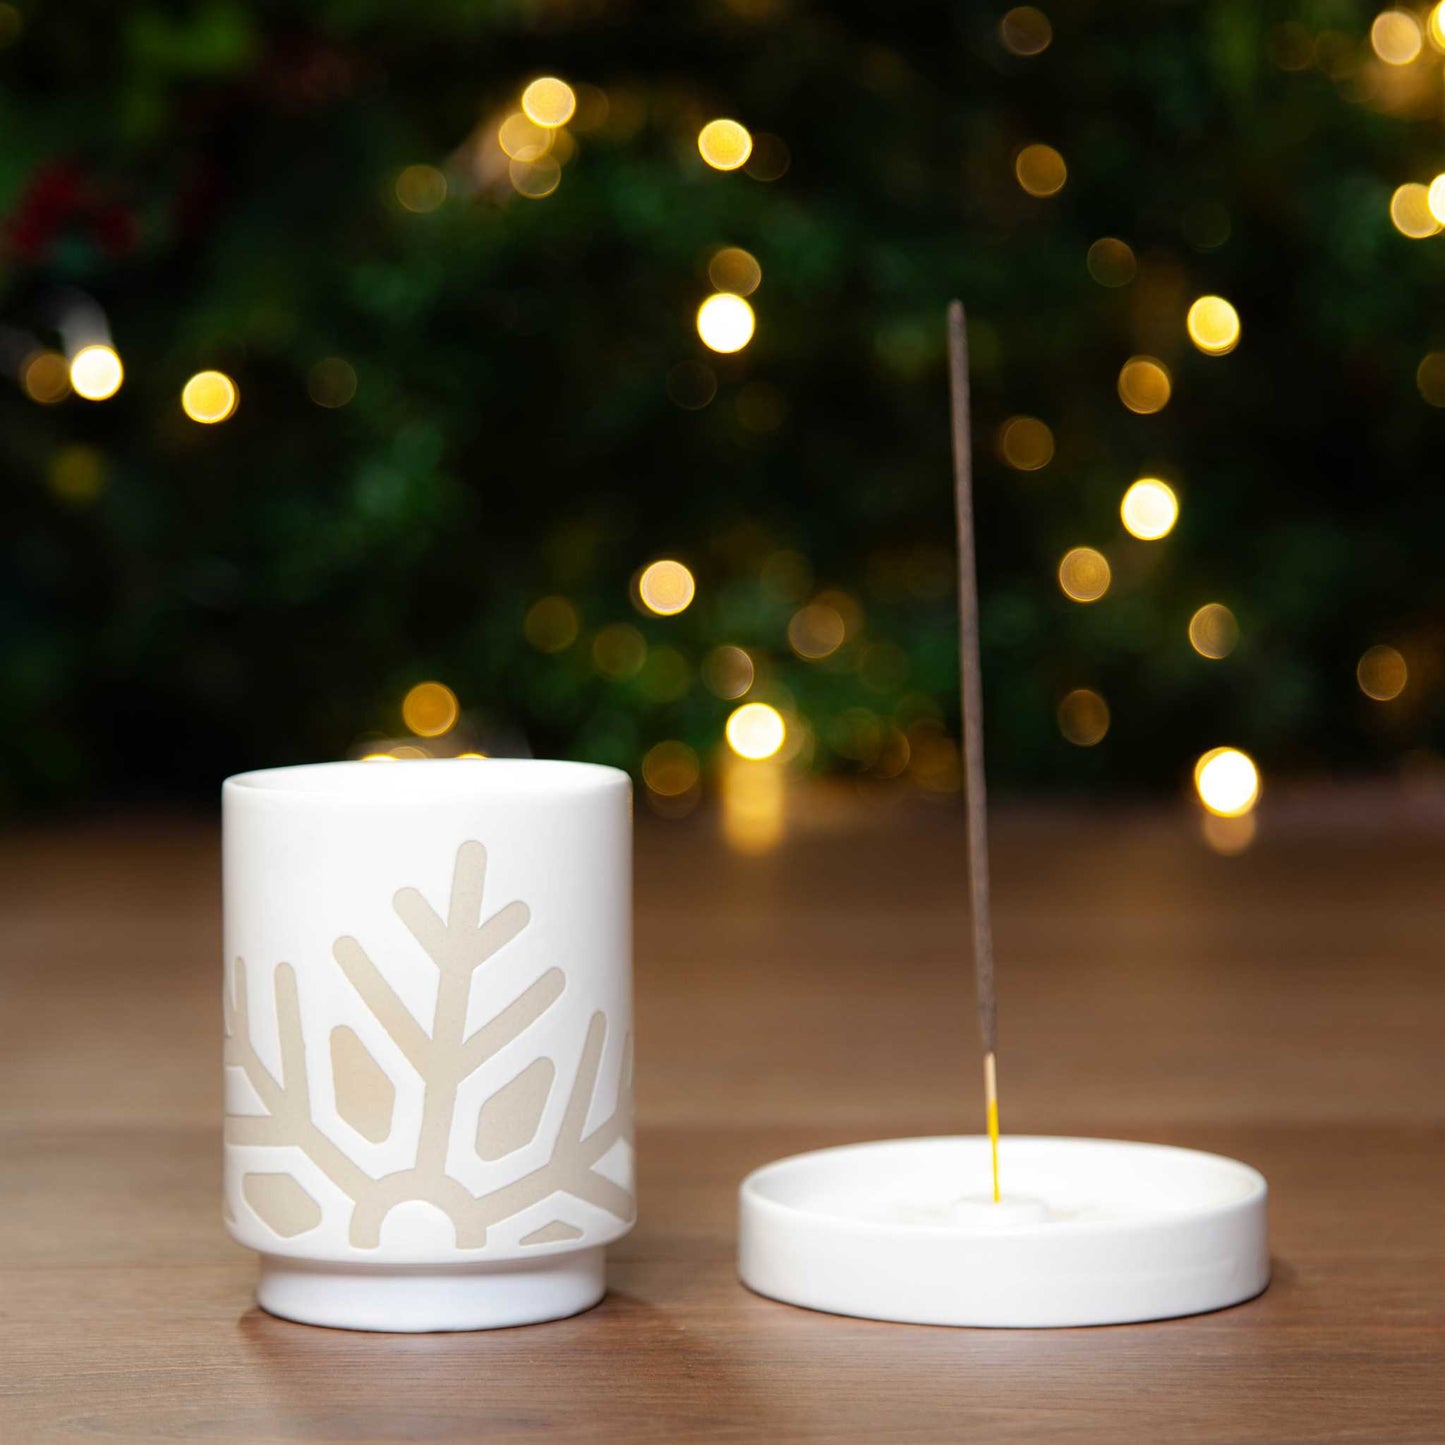 Puckator Home Fragrance Accessories Christmas Snowflake White Glaze Relief Stoneware Incense Burner